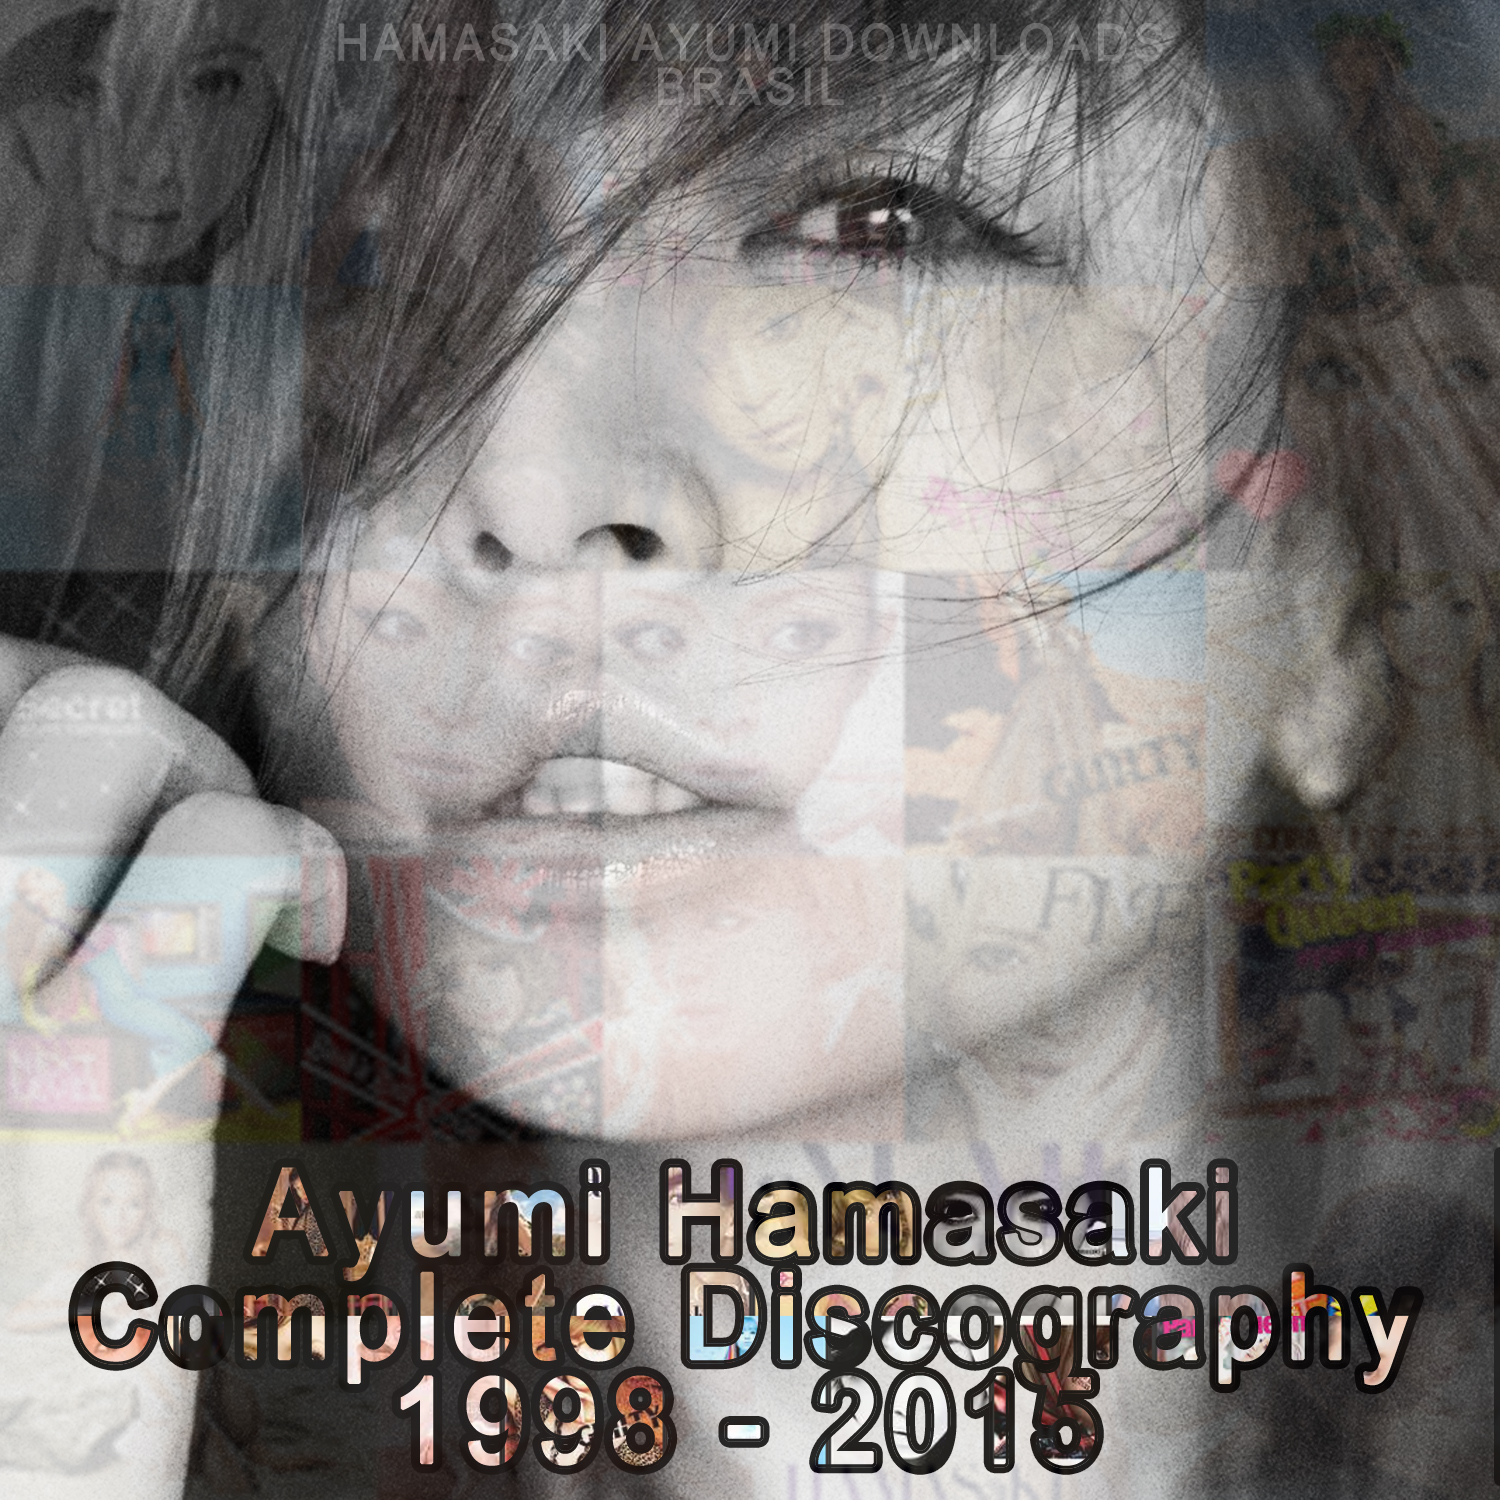 Ayumi hamasaki complete discography